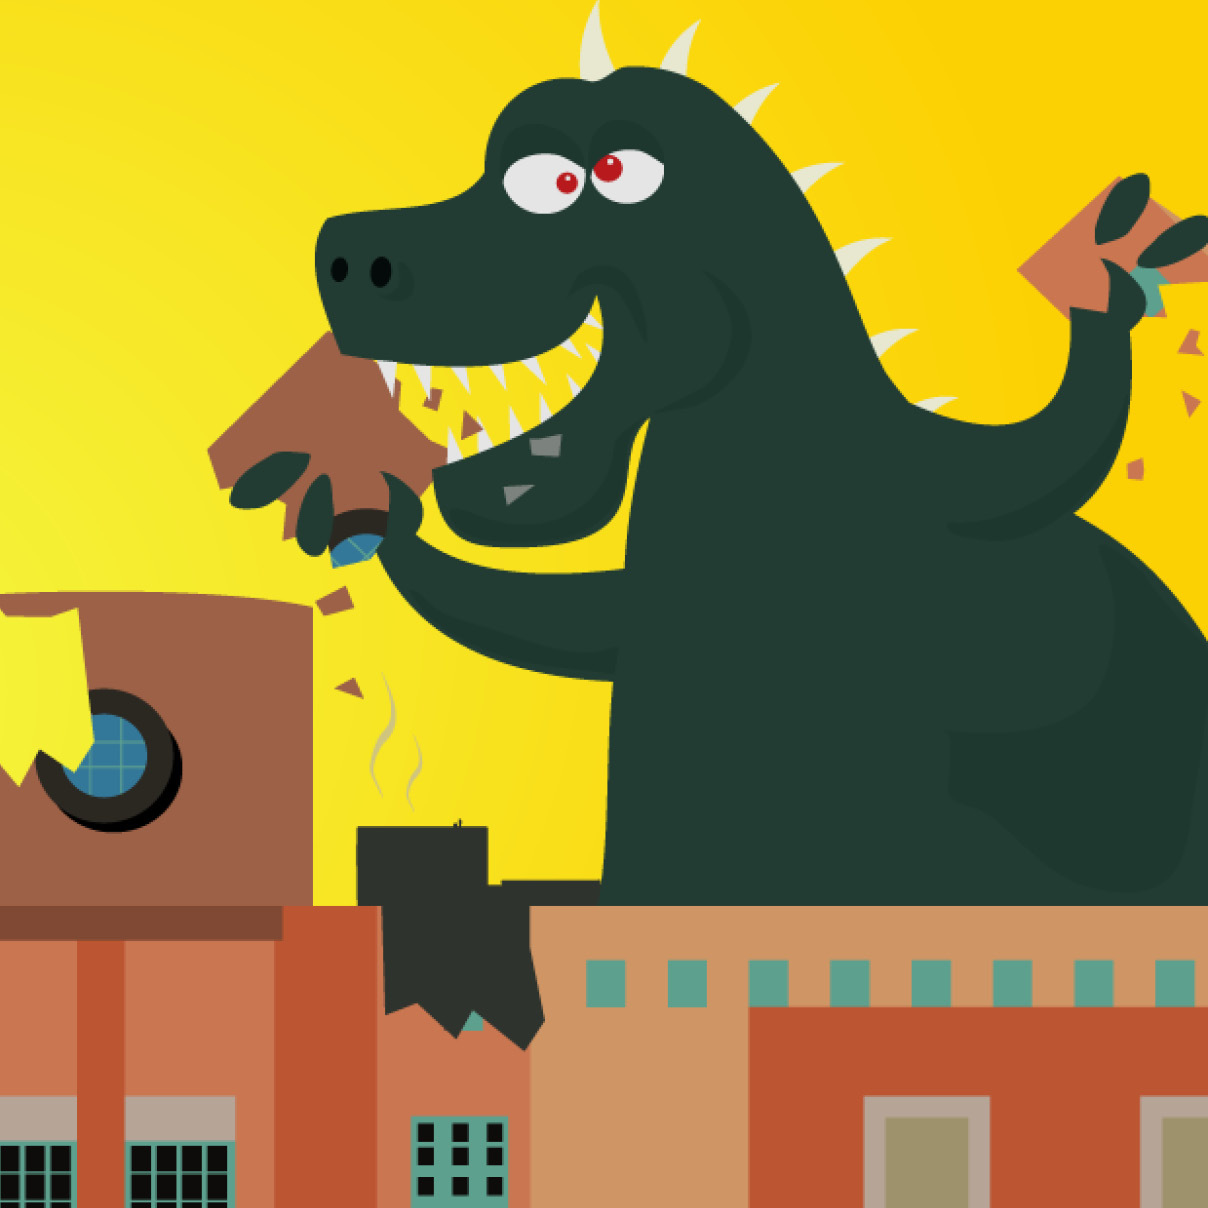 Cartoon of Godzilla type creature eating the library